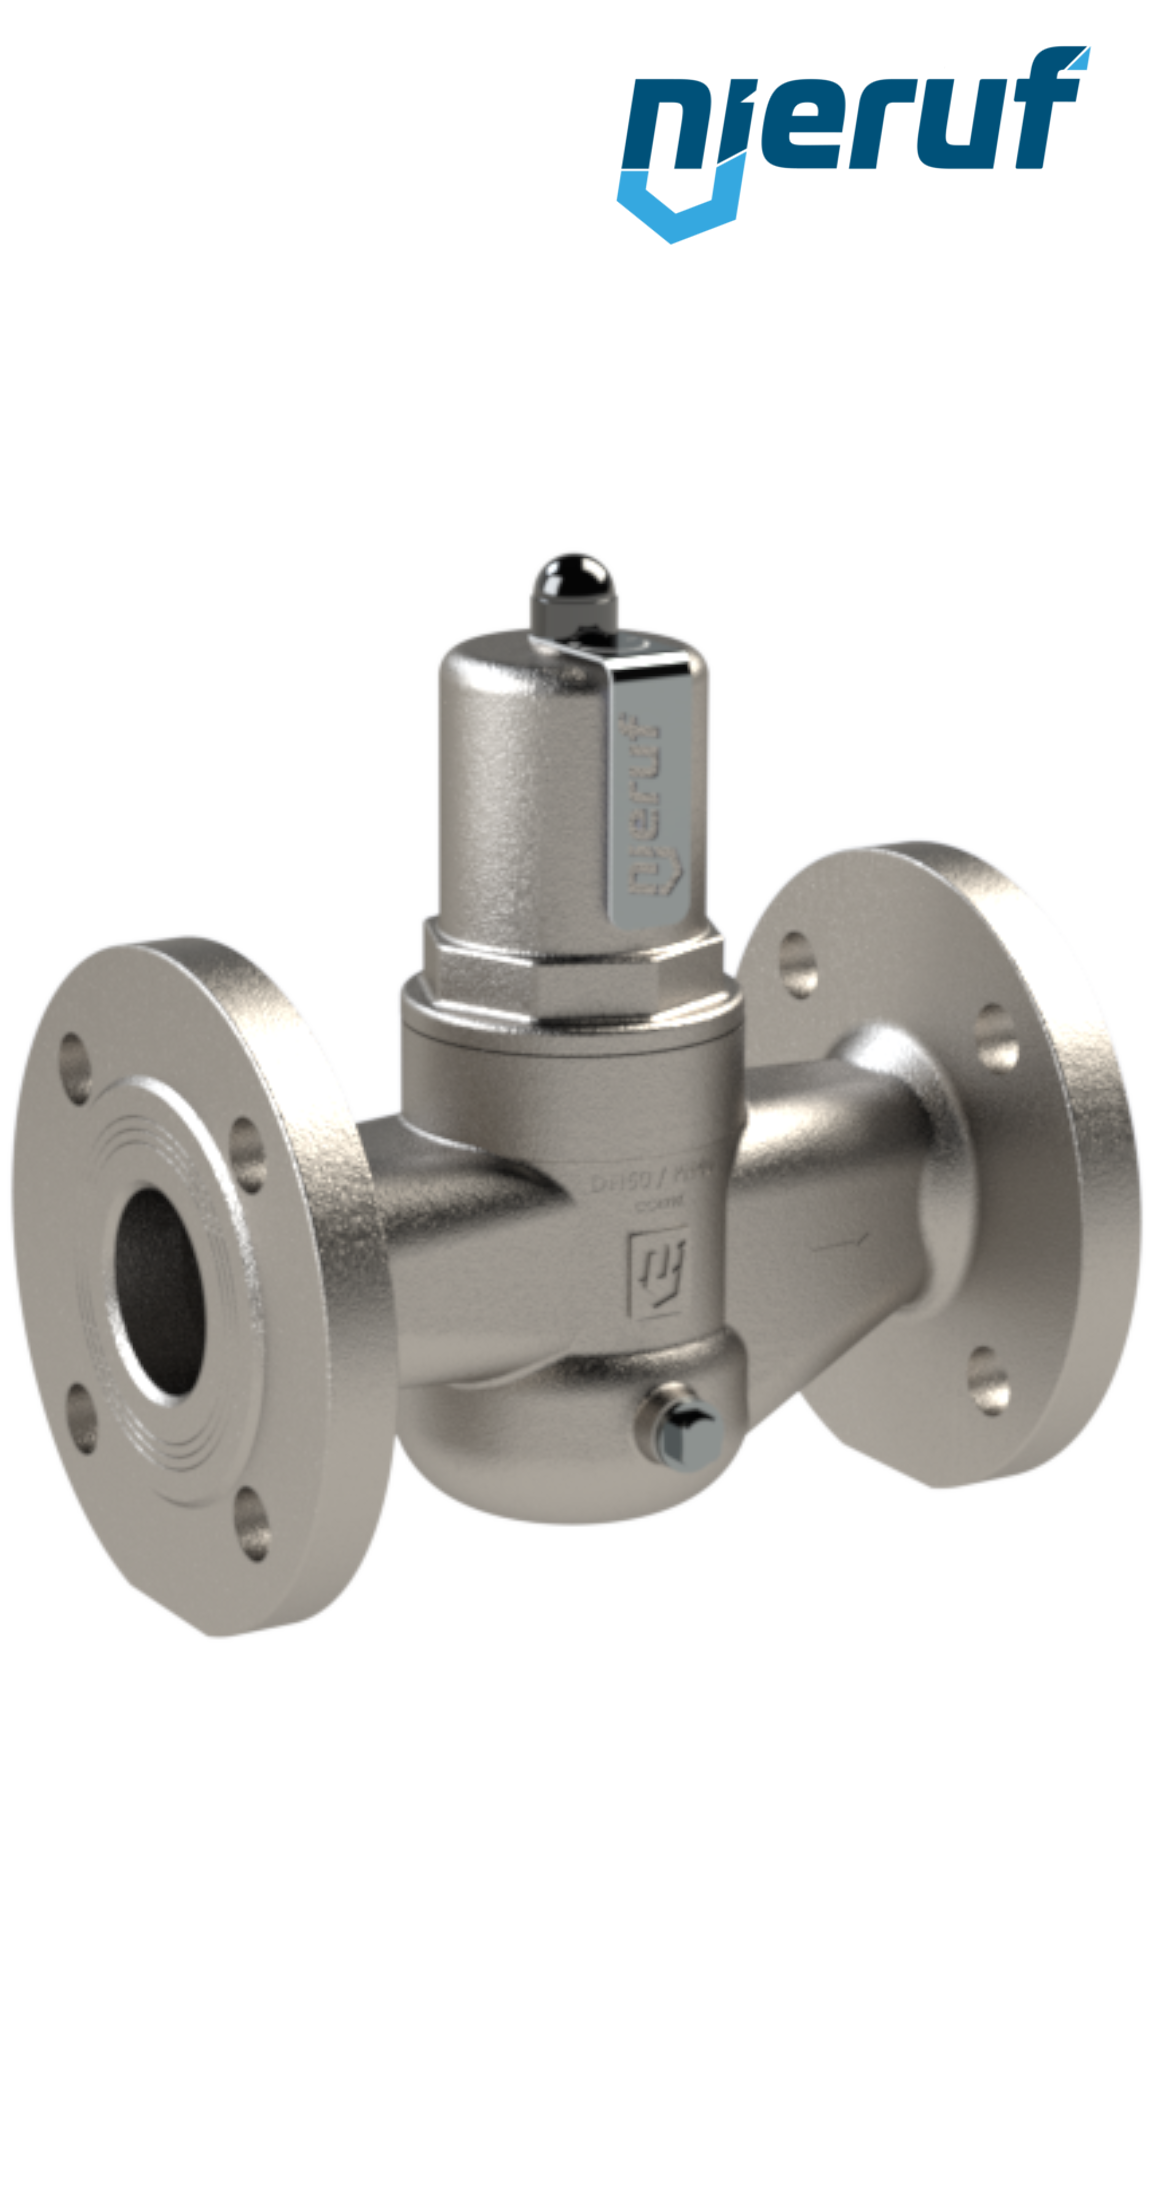 Flange-pressure reducing valve DN 25 PN40 DM08 stainless steel FKM 1.0 - 8.0 bar